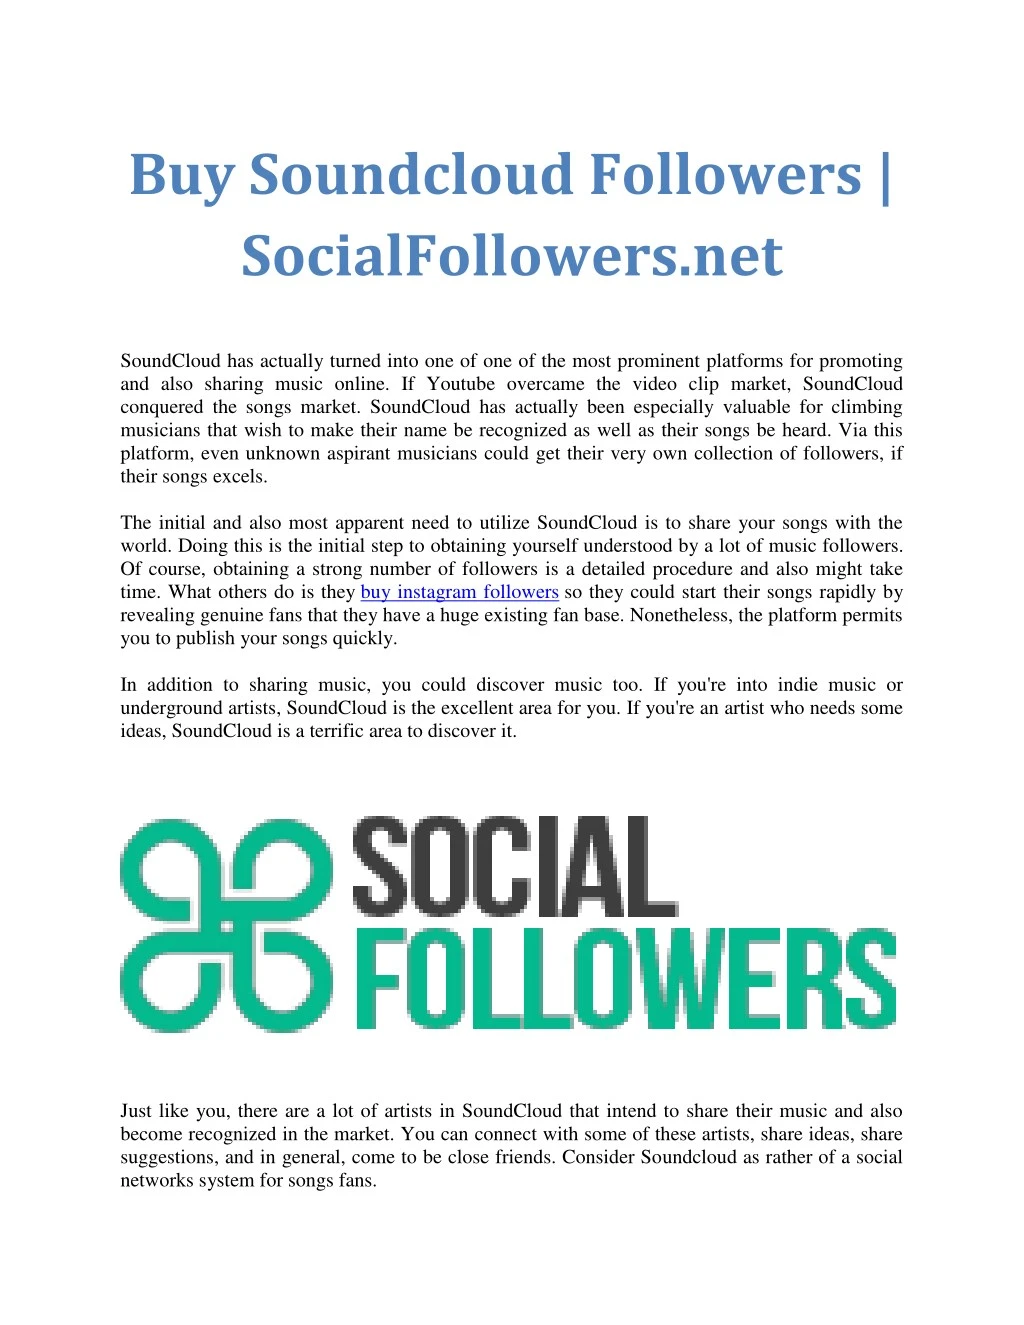 buy soundcloud followers socialfollowers net